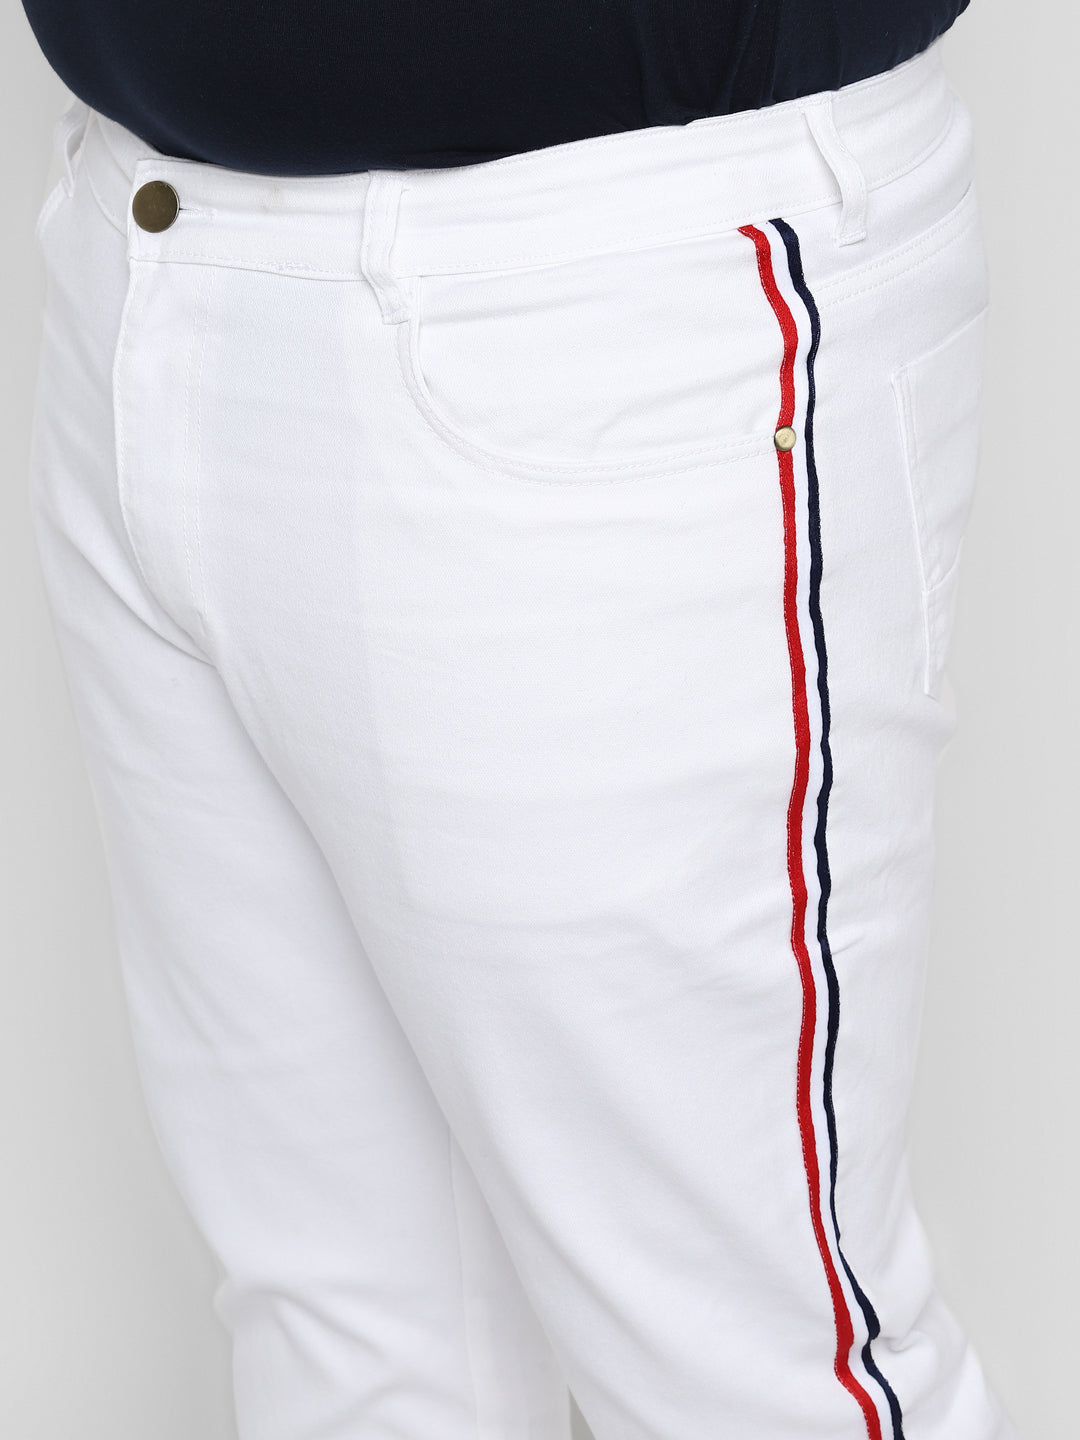 Plus Men's White Regular Fit Side Striped Denim Jeans Stretchable